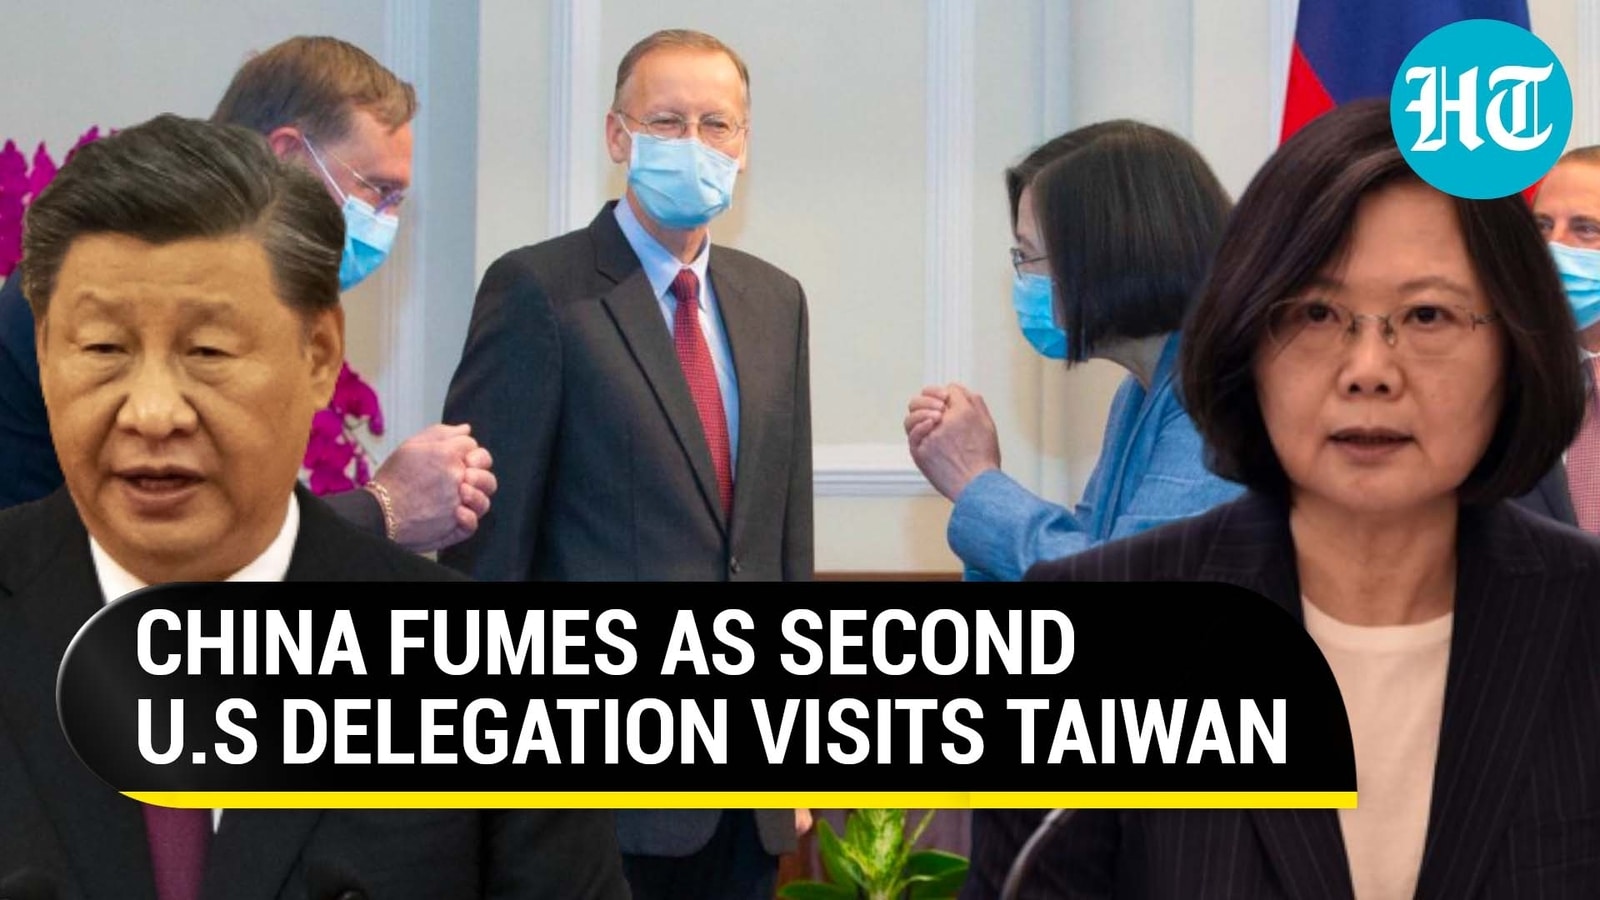 Xi pressurizes Taiwan post 2nd U.S delegation visit; China sanctions 7 officials